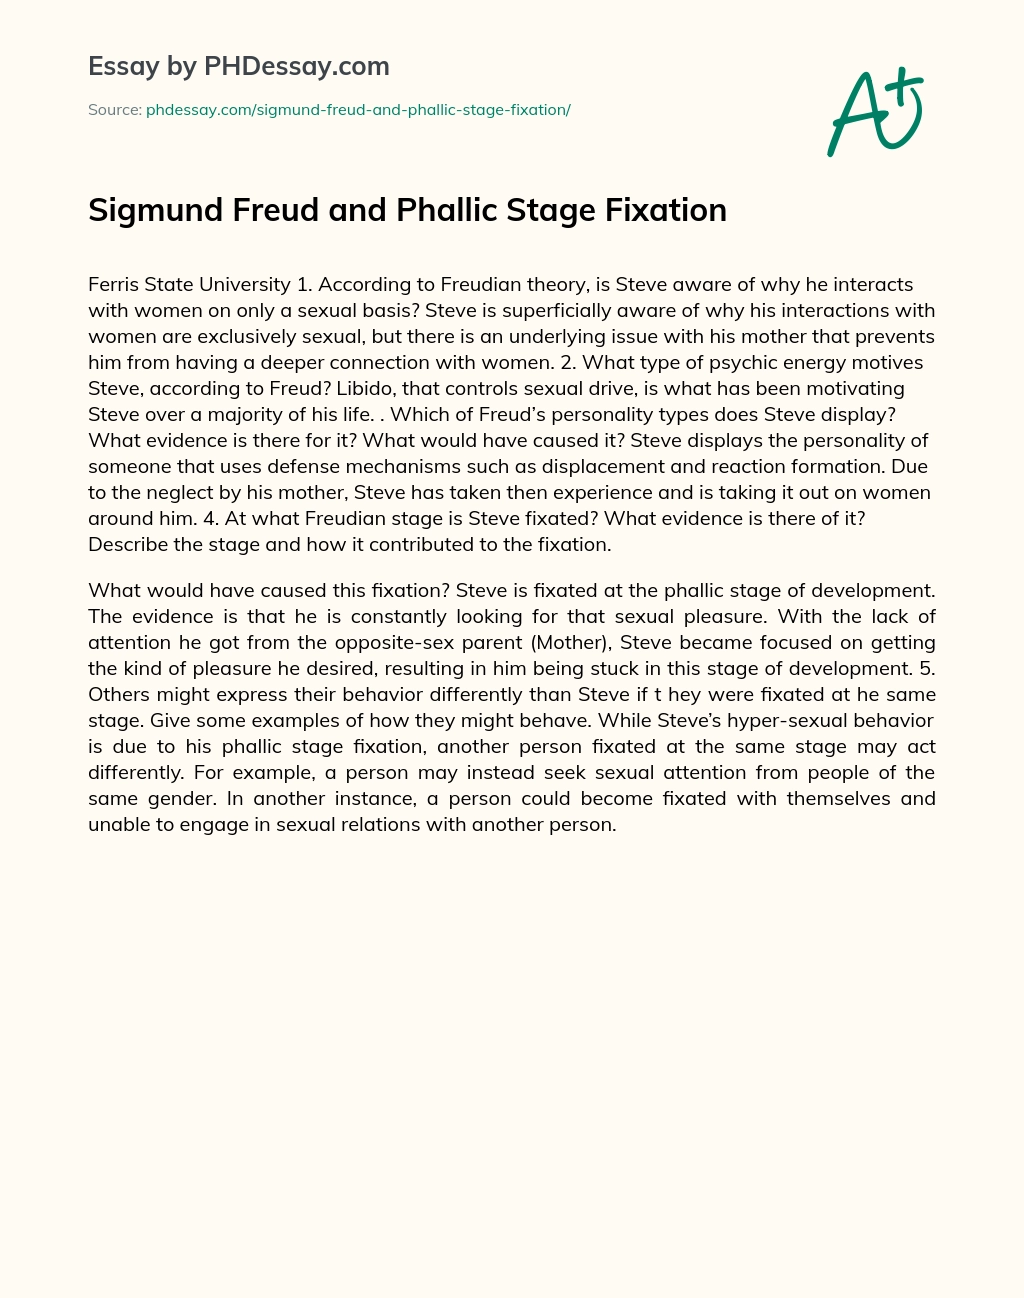 Sigmund Freud and Phallic Stage Fixation essay